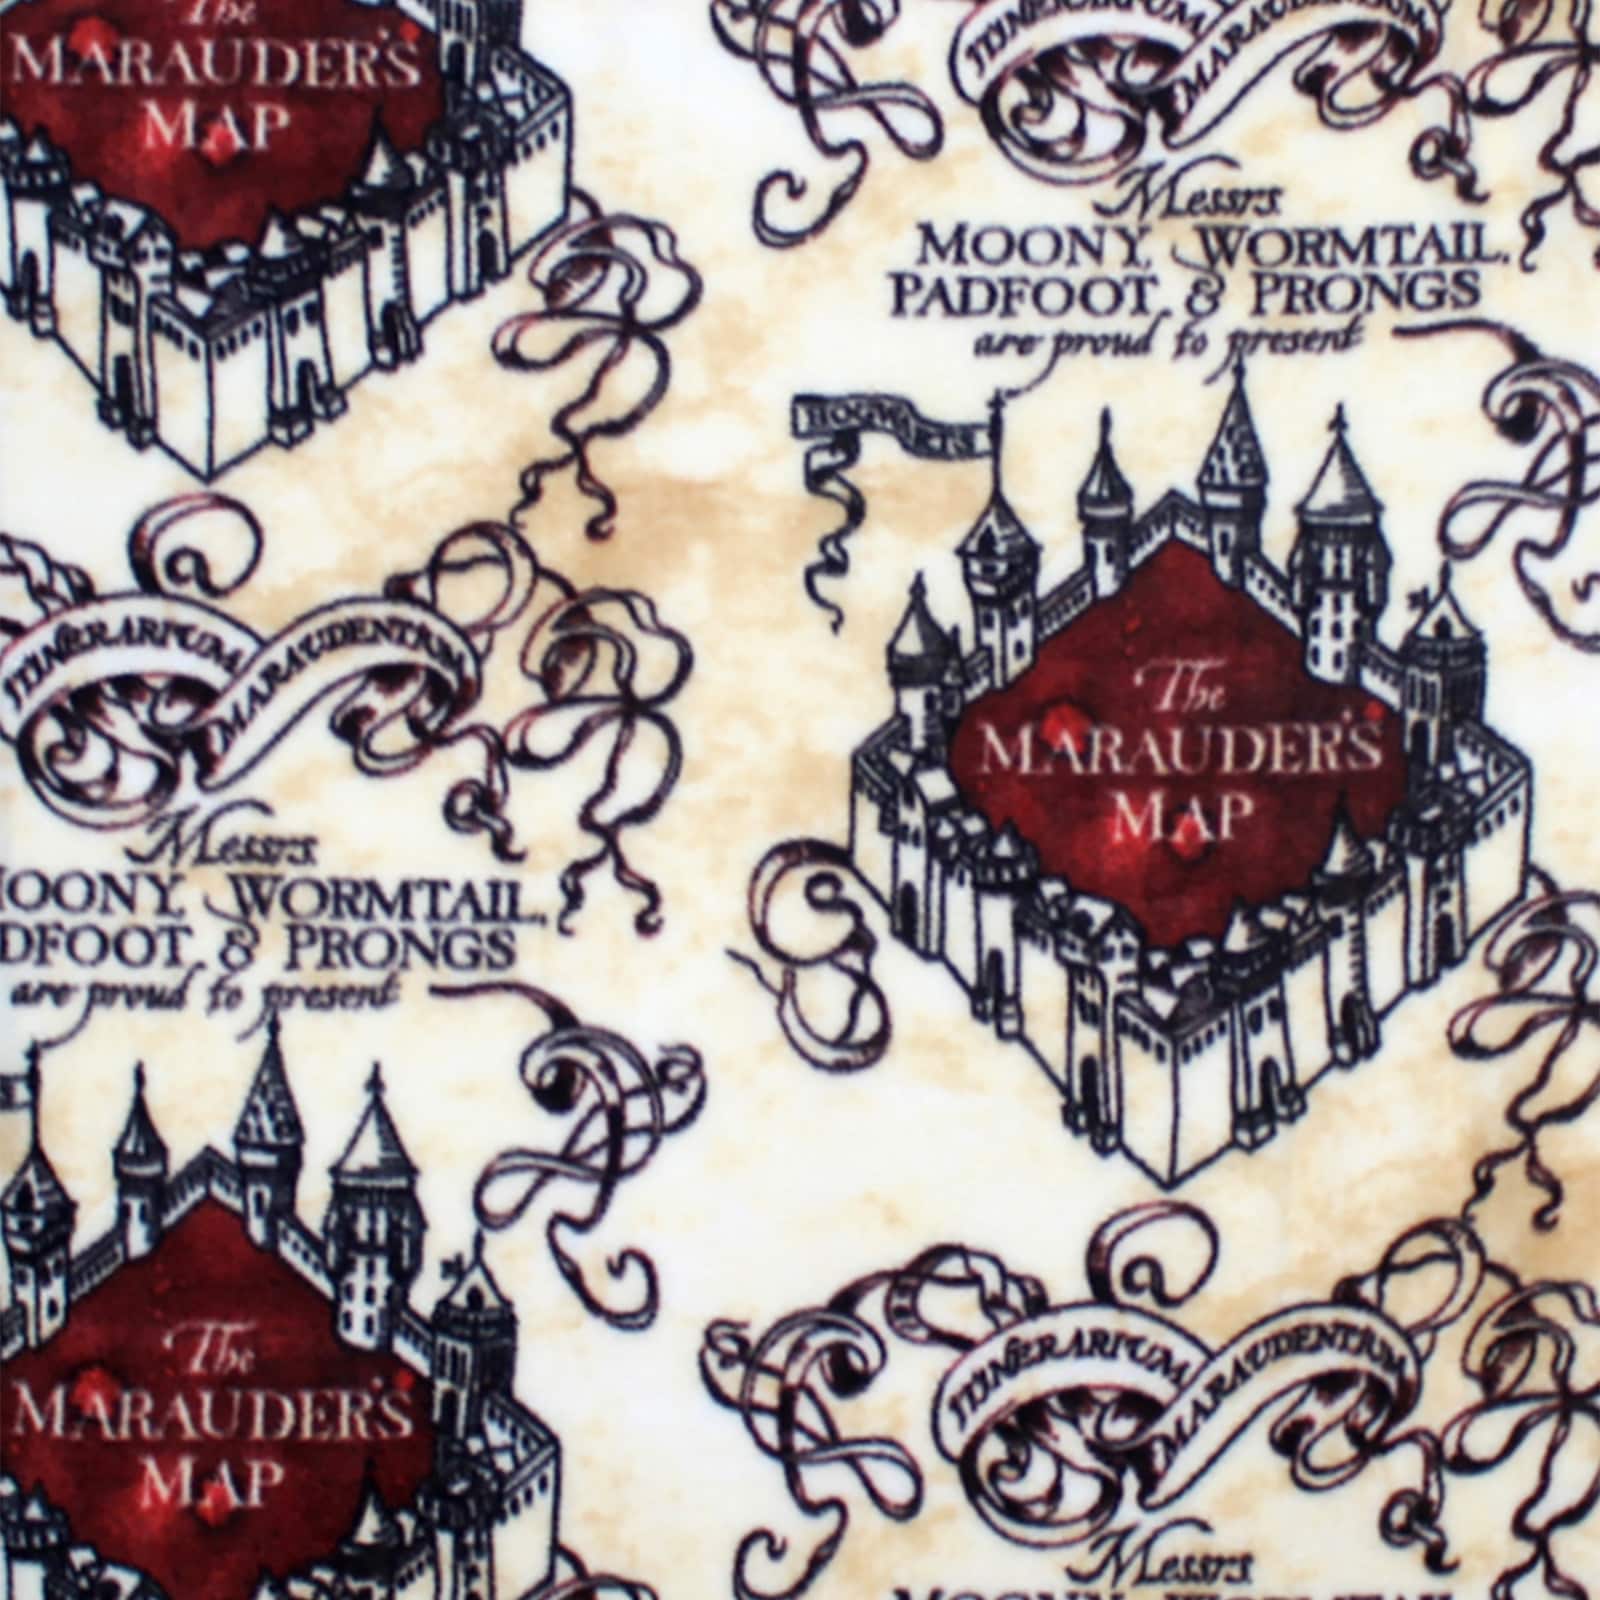 Find The Camelot Fabrics Harry Potter Tan Marauders Map Fleece Fabric At Michaelscom